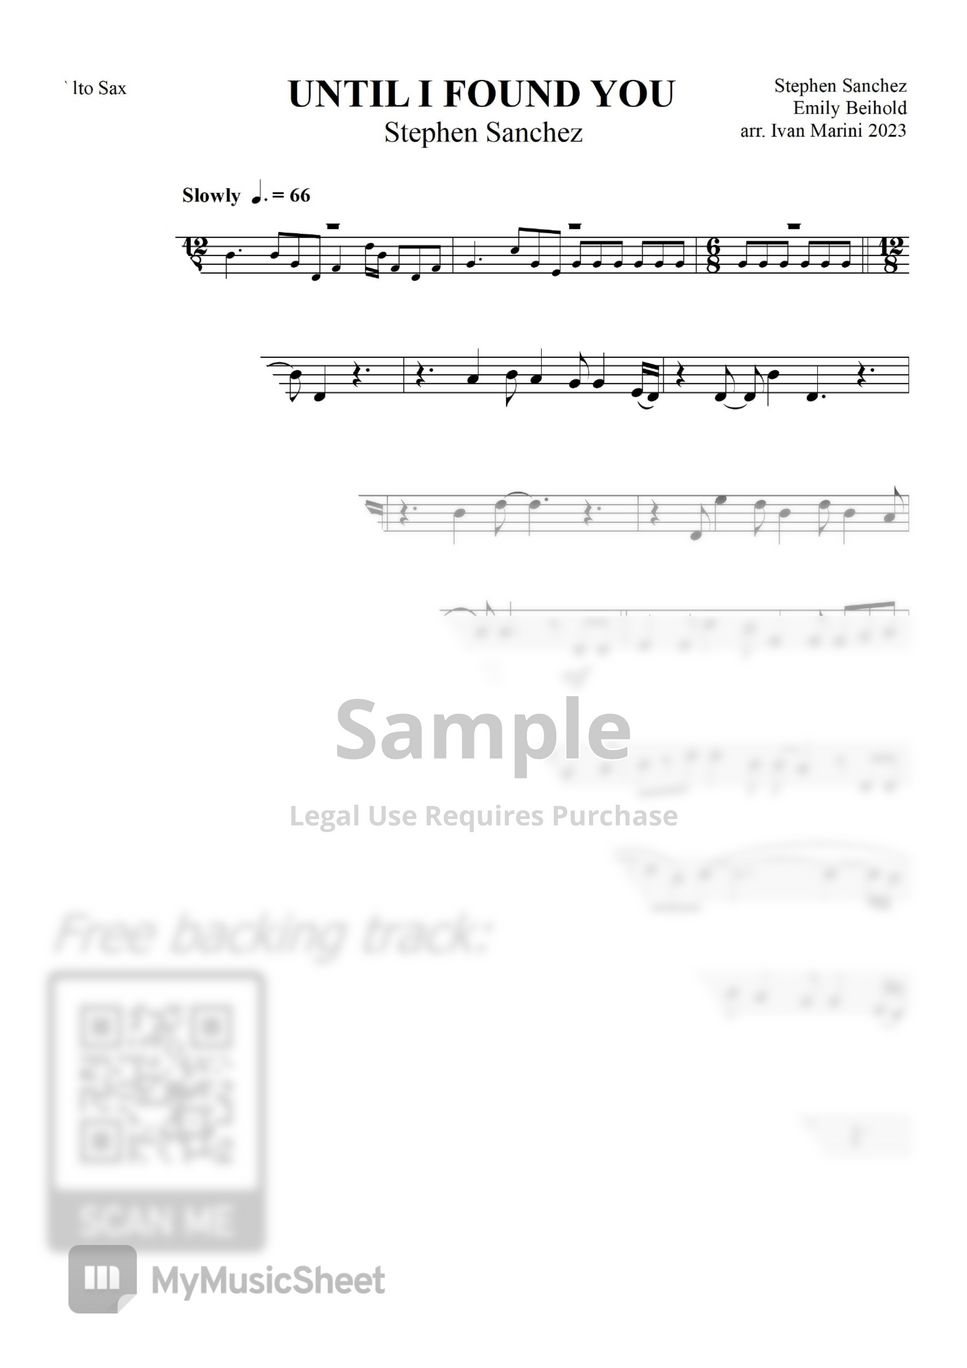 Backing track & Sheet Music for Saxophone 